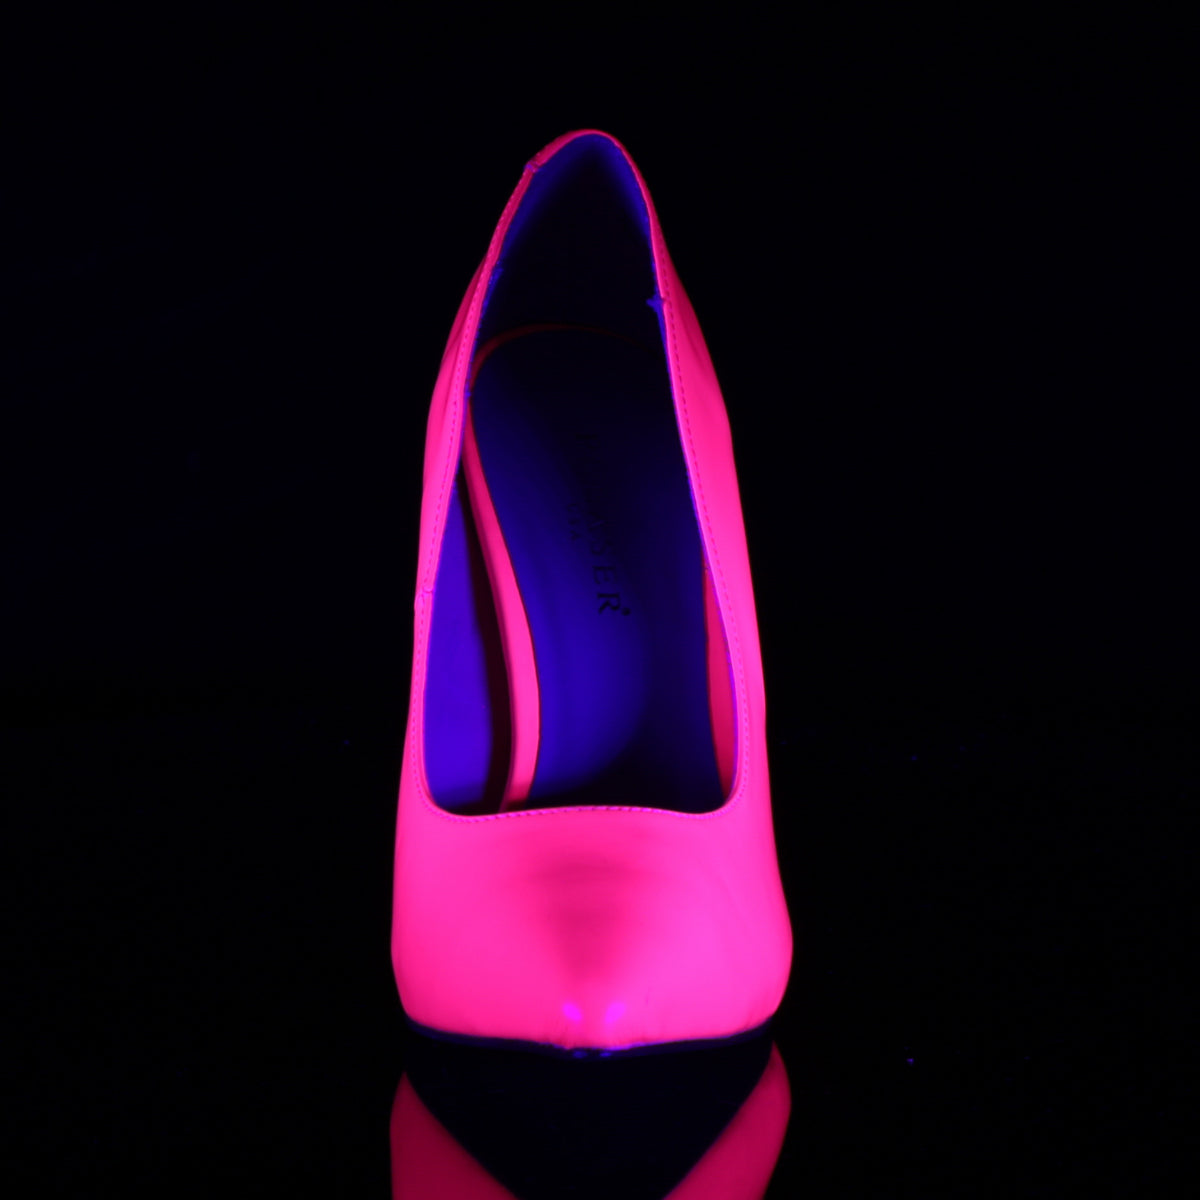 AMUSE-20 Pleaser Neon Fuchsia Patent Single Sole Shoes [Sexy Shoes]